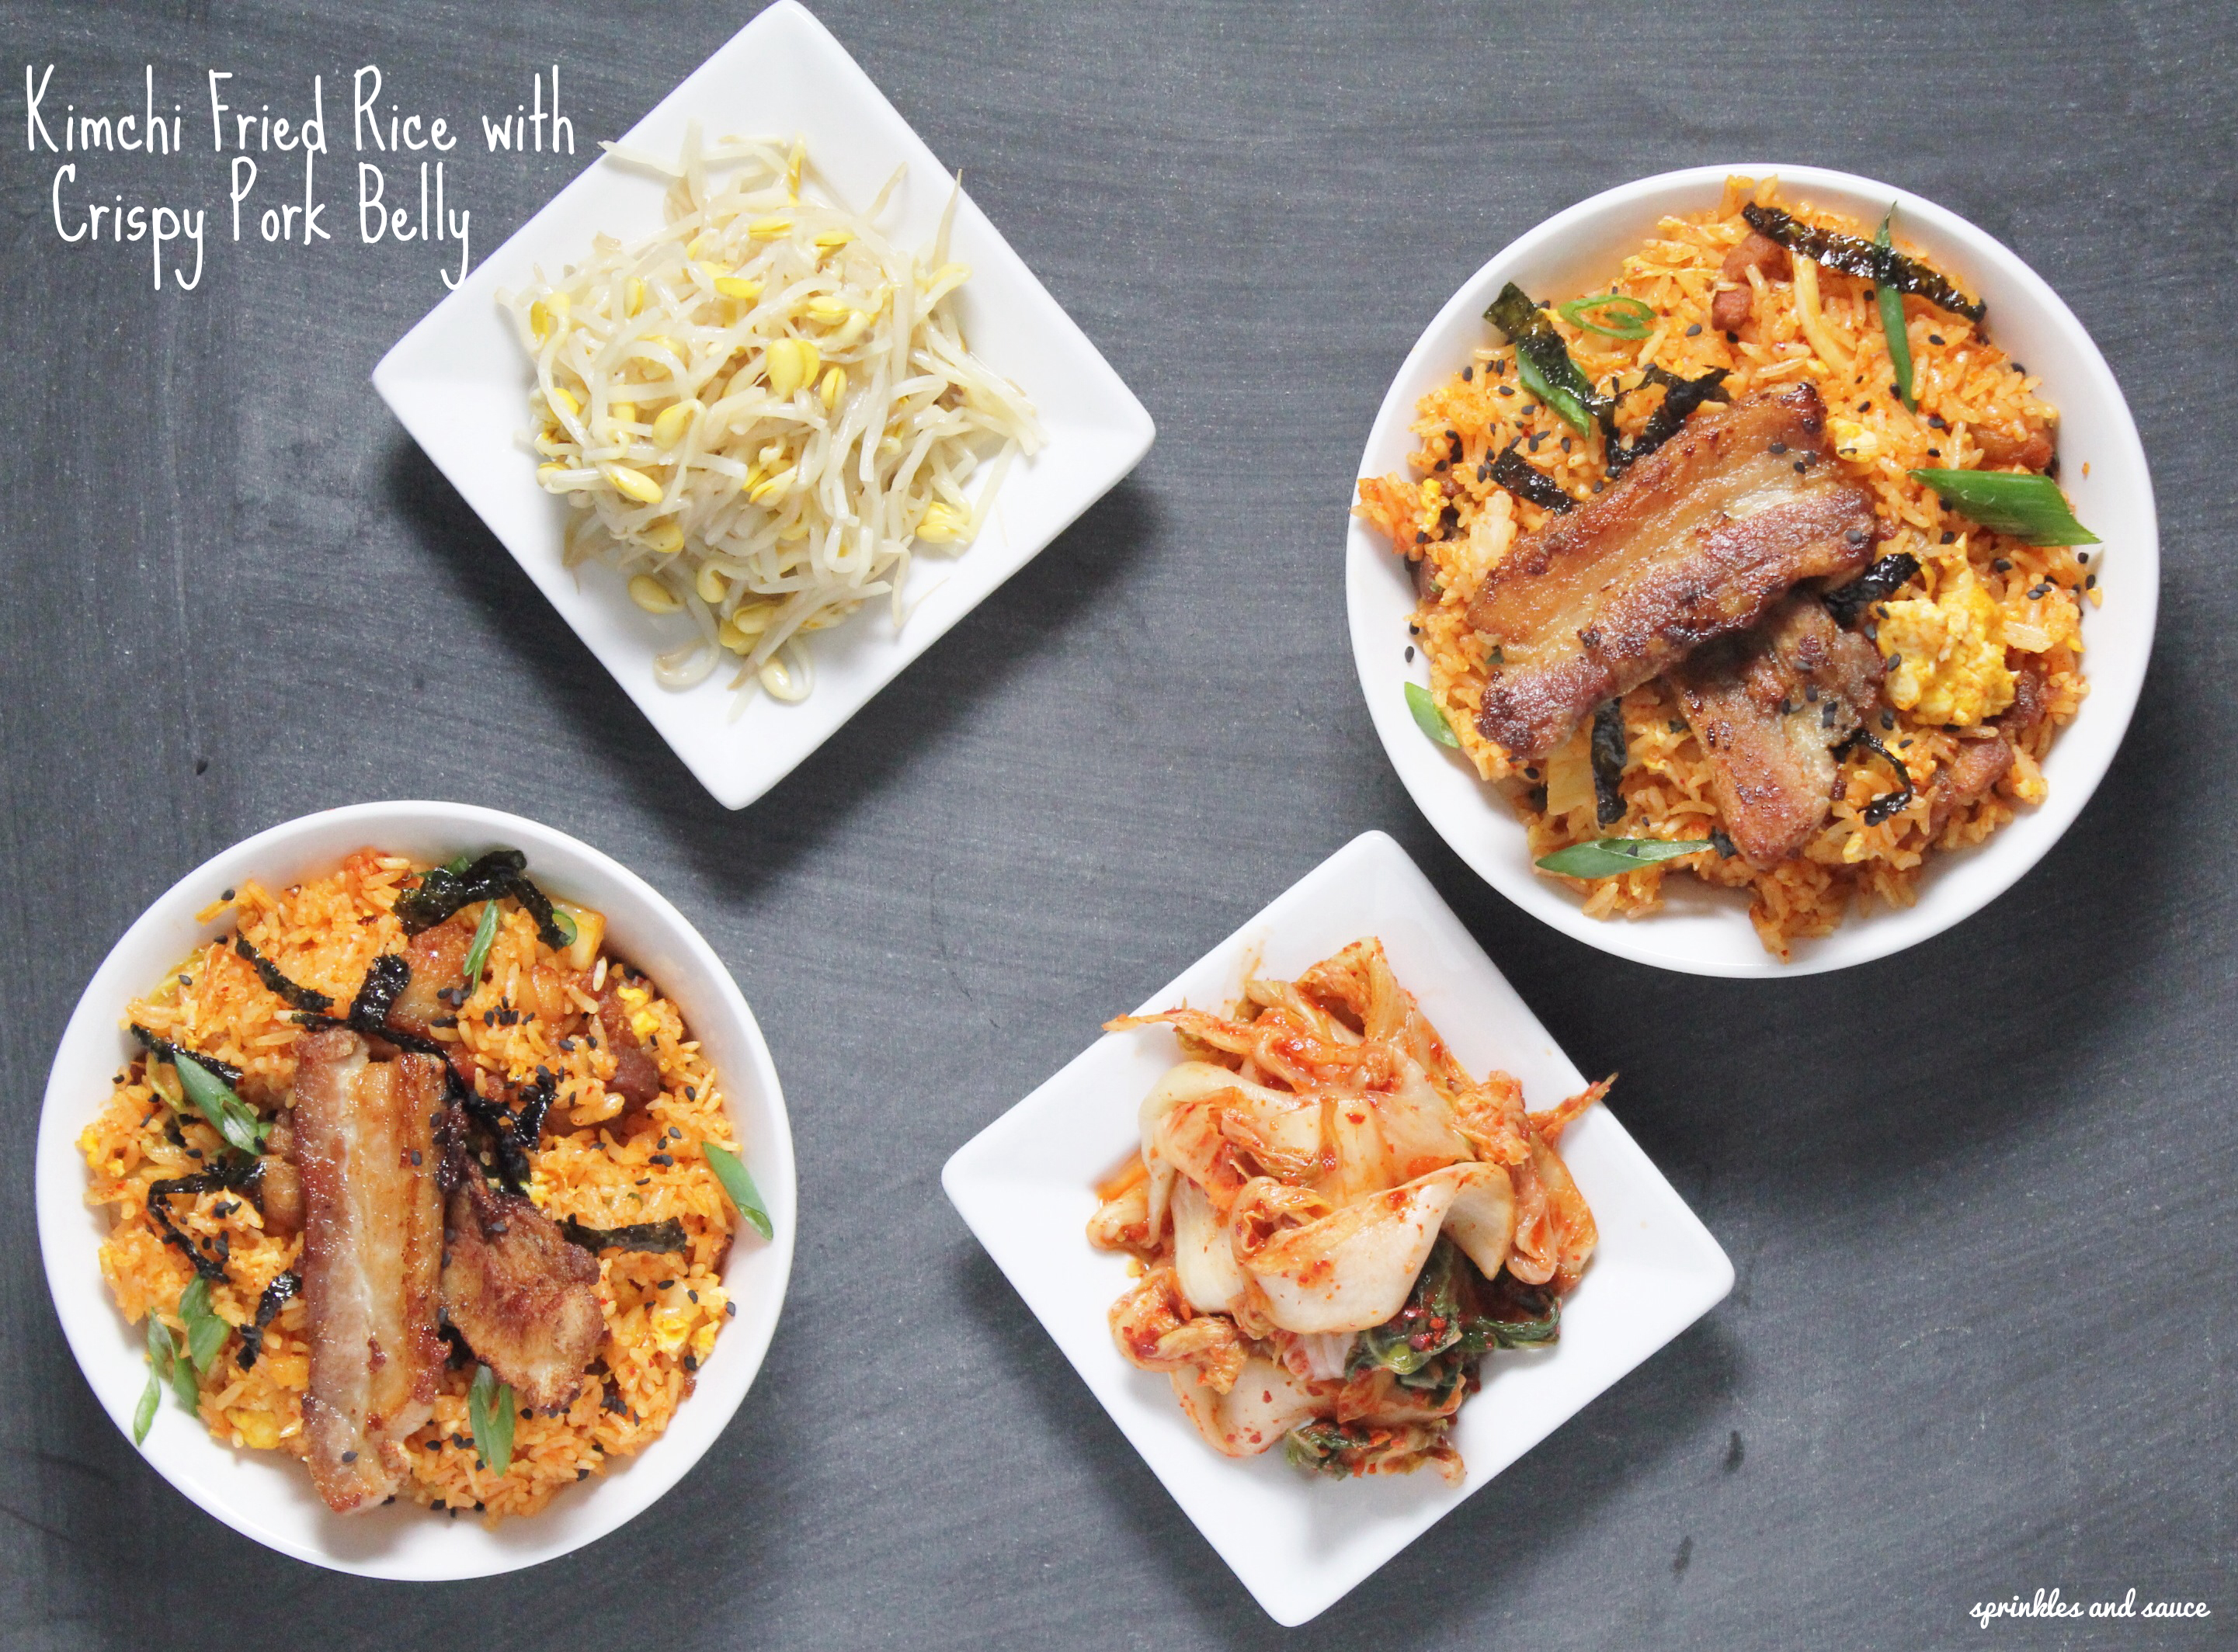 Kimchi Fried Rice with Crispy Pork Belly